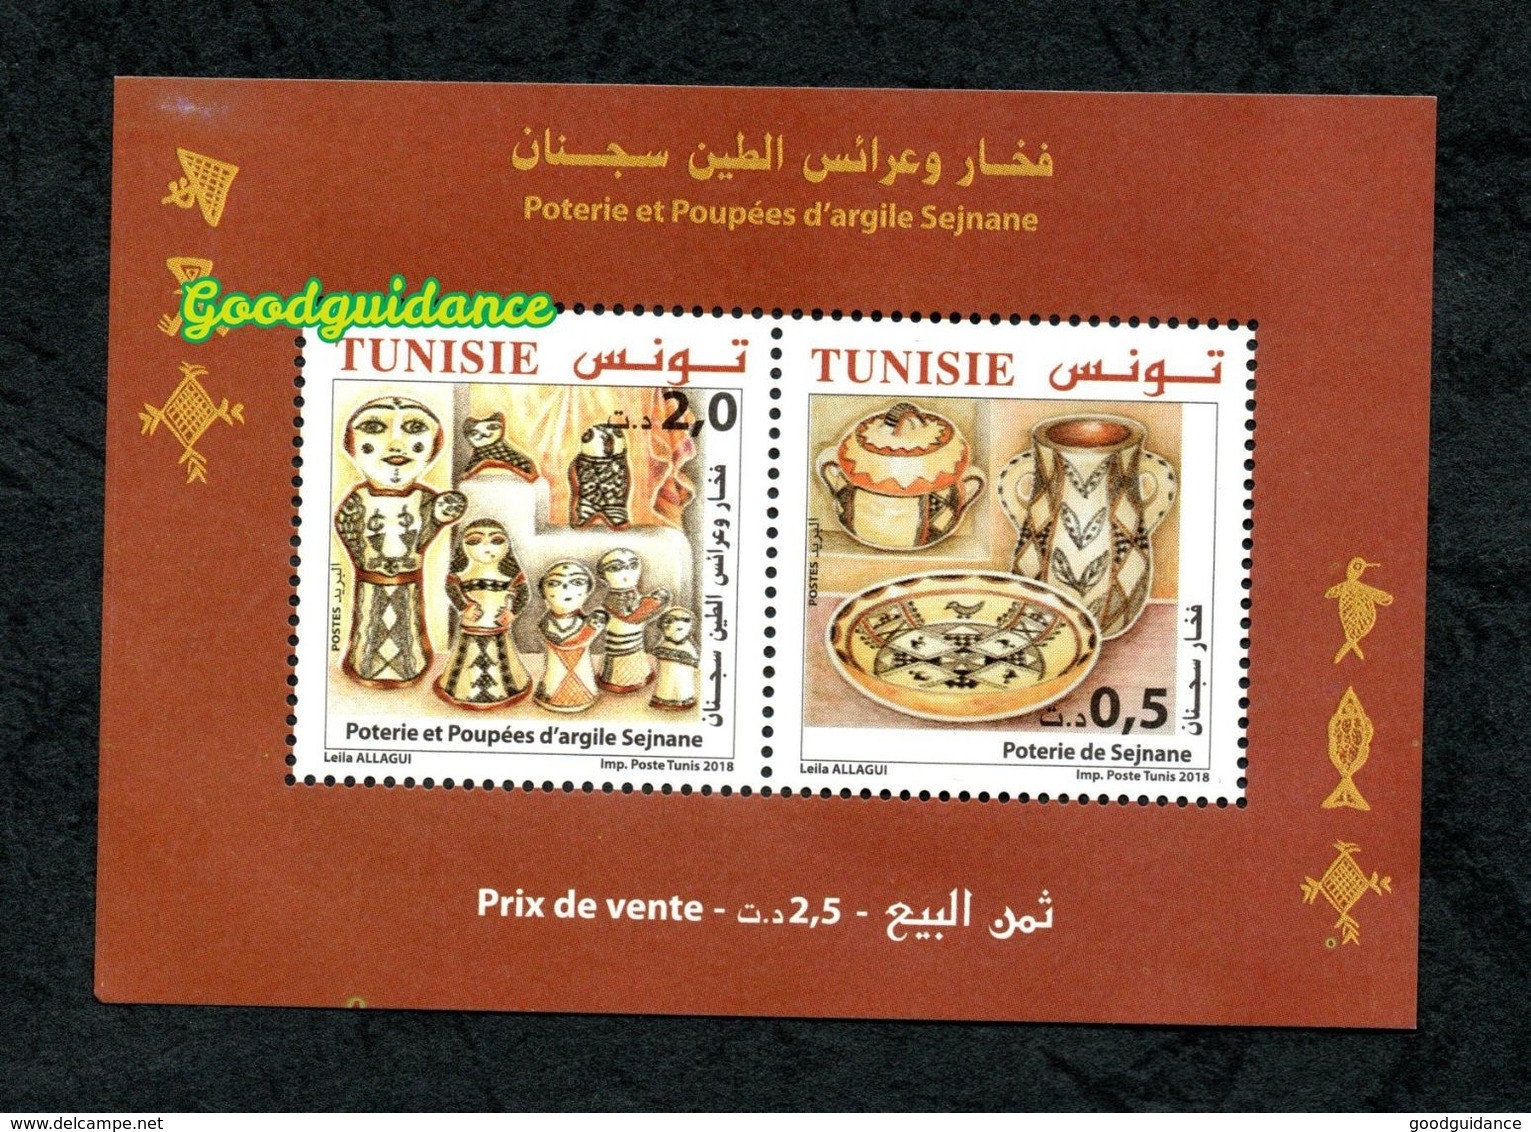 2018- Tunisia- Tunisie- Poterie De Tunise - Pottery Of Tunisia- Perforatd Block - Block Perforé- MNH** - Porcellana